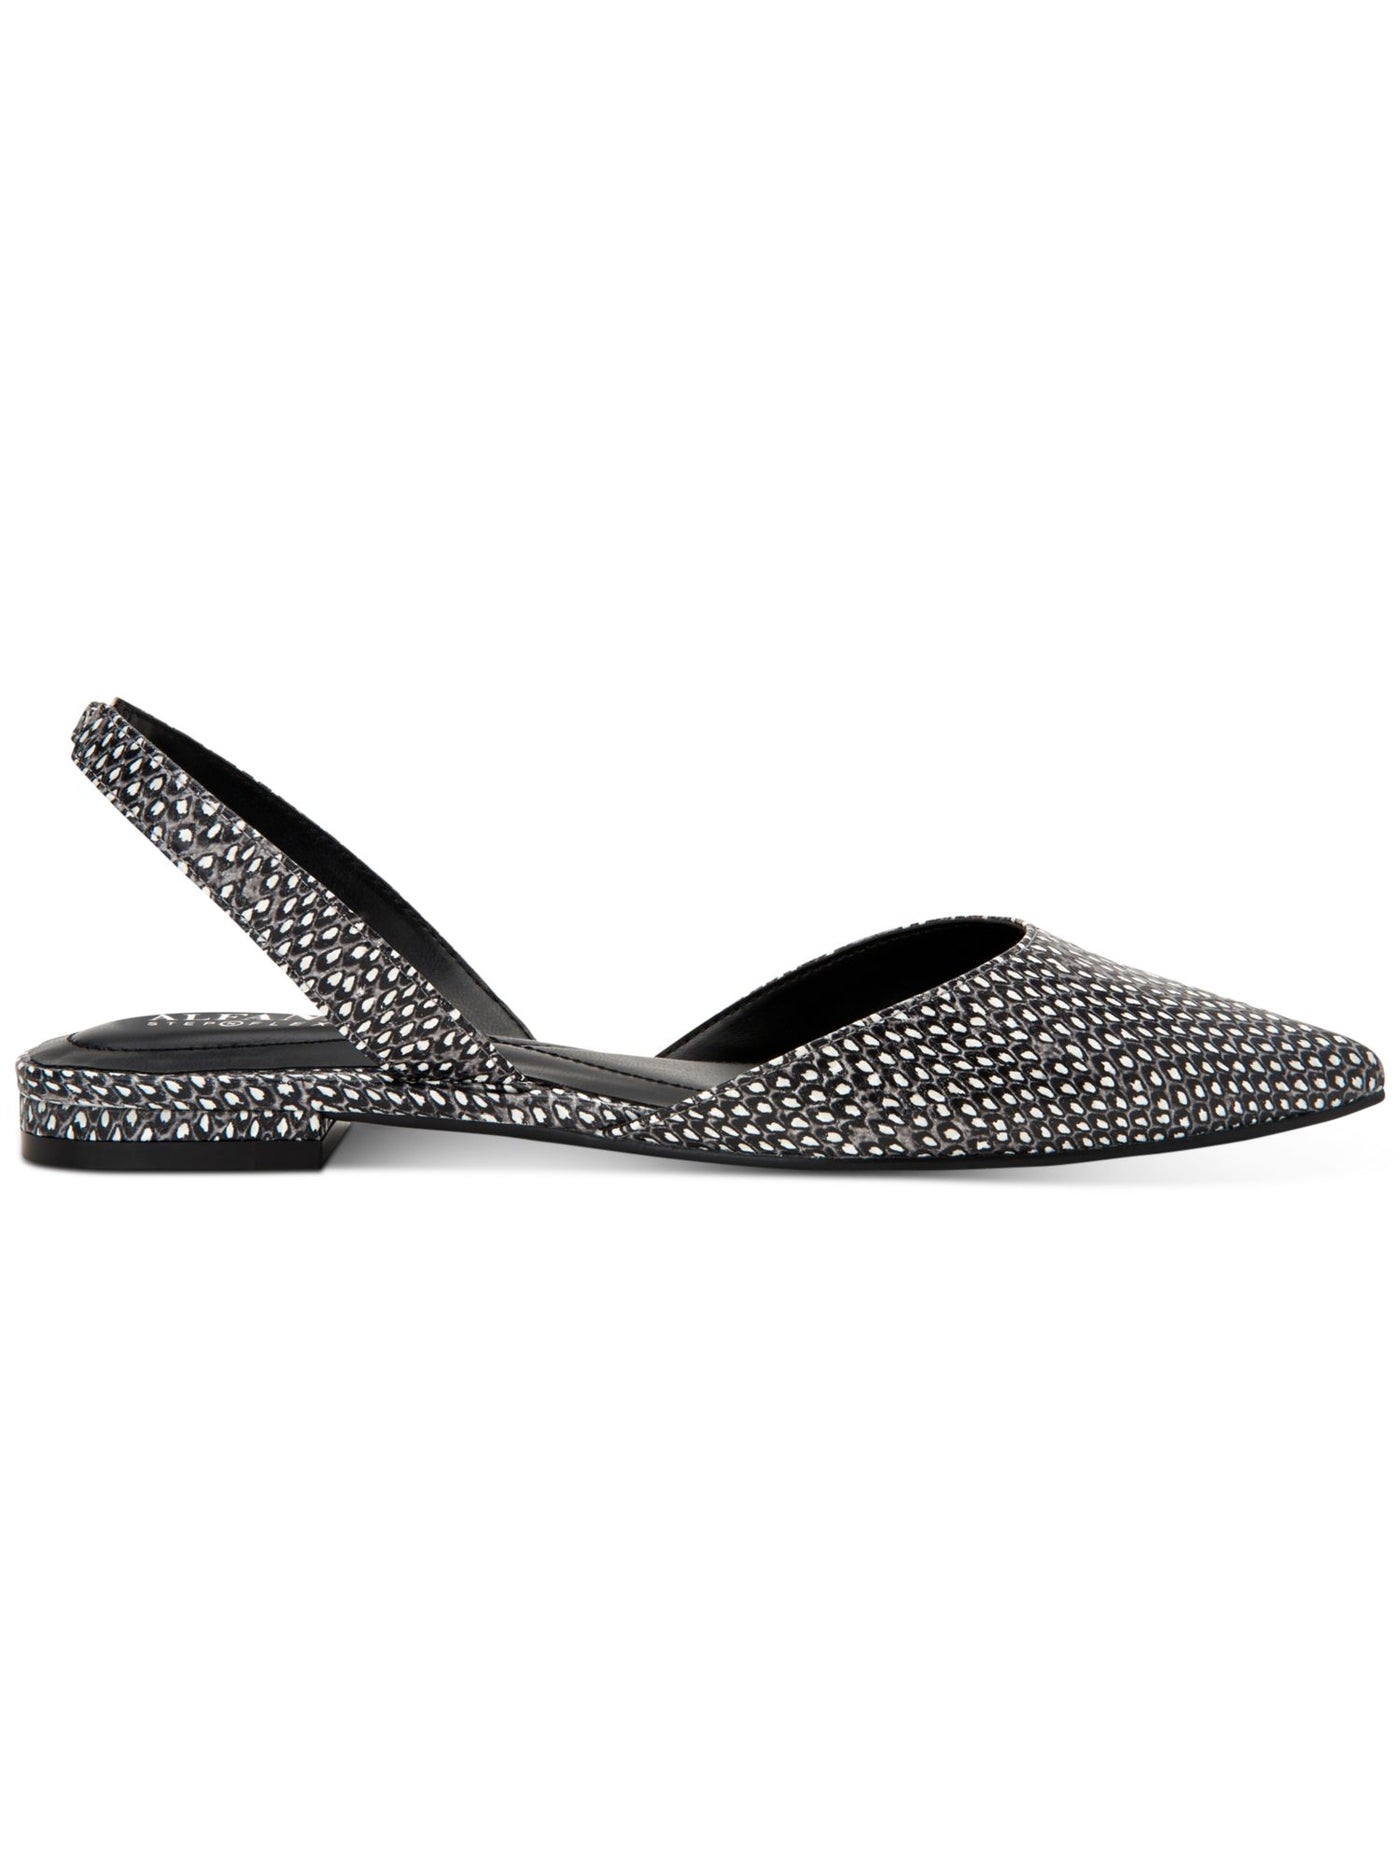 ALFANI Womens Black Snakeskin Cushioned Comfort Ryann Pointed Toe Block Heel Slip On Flats Shoes 9 M